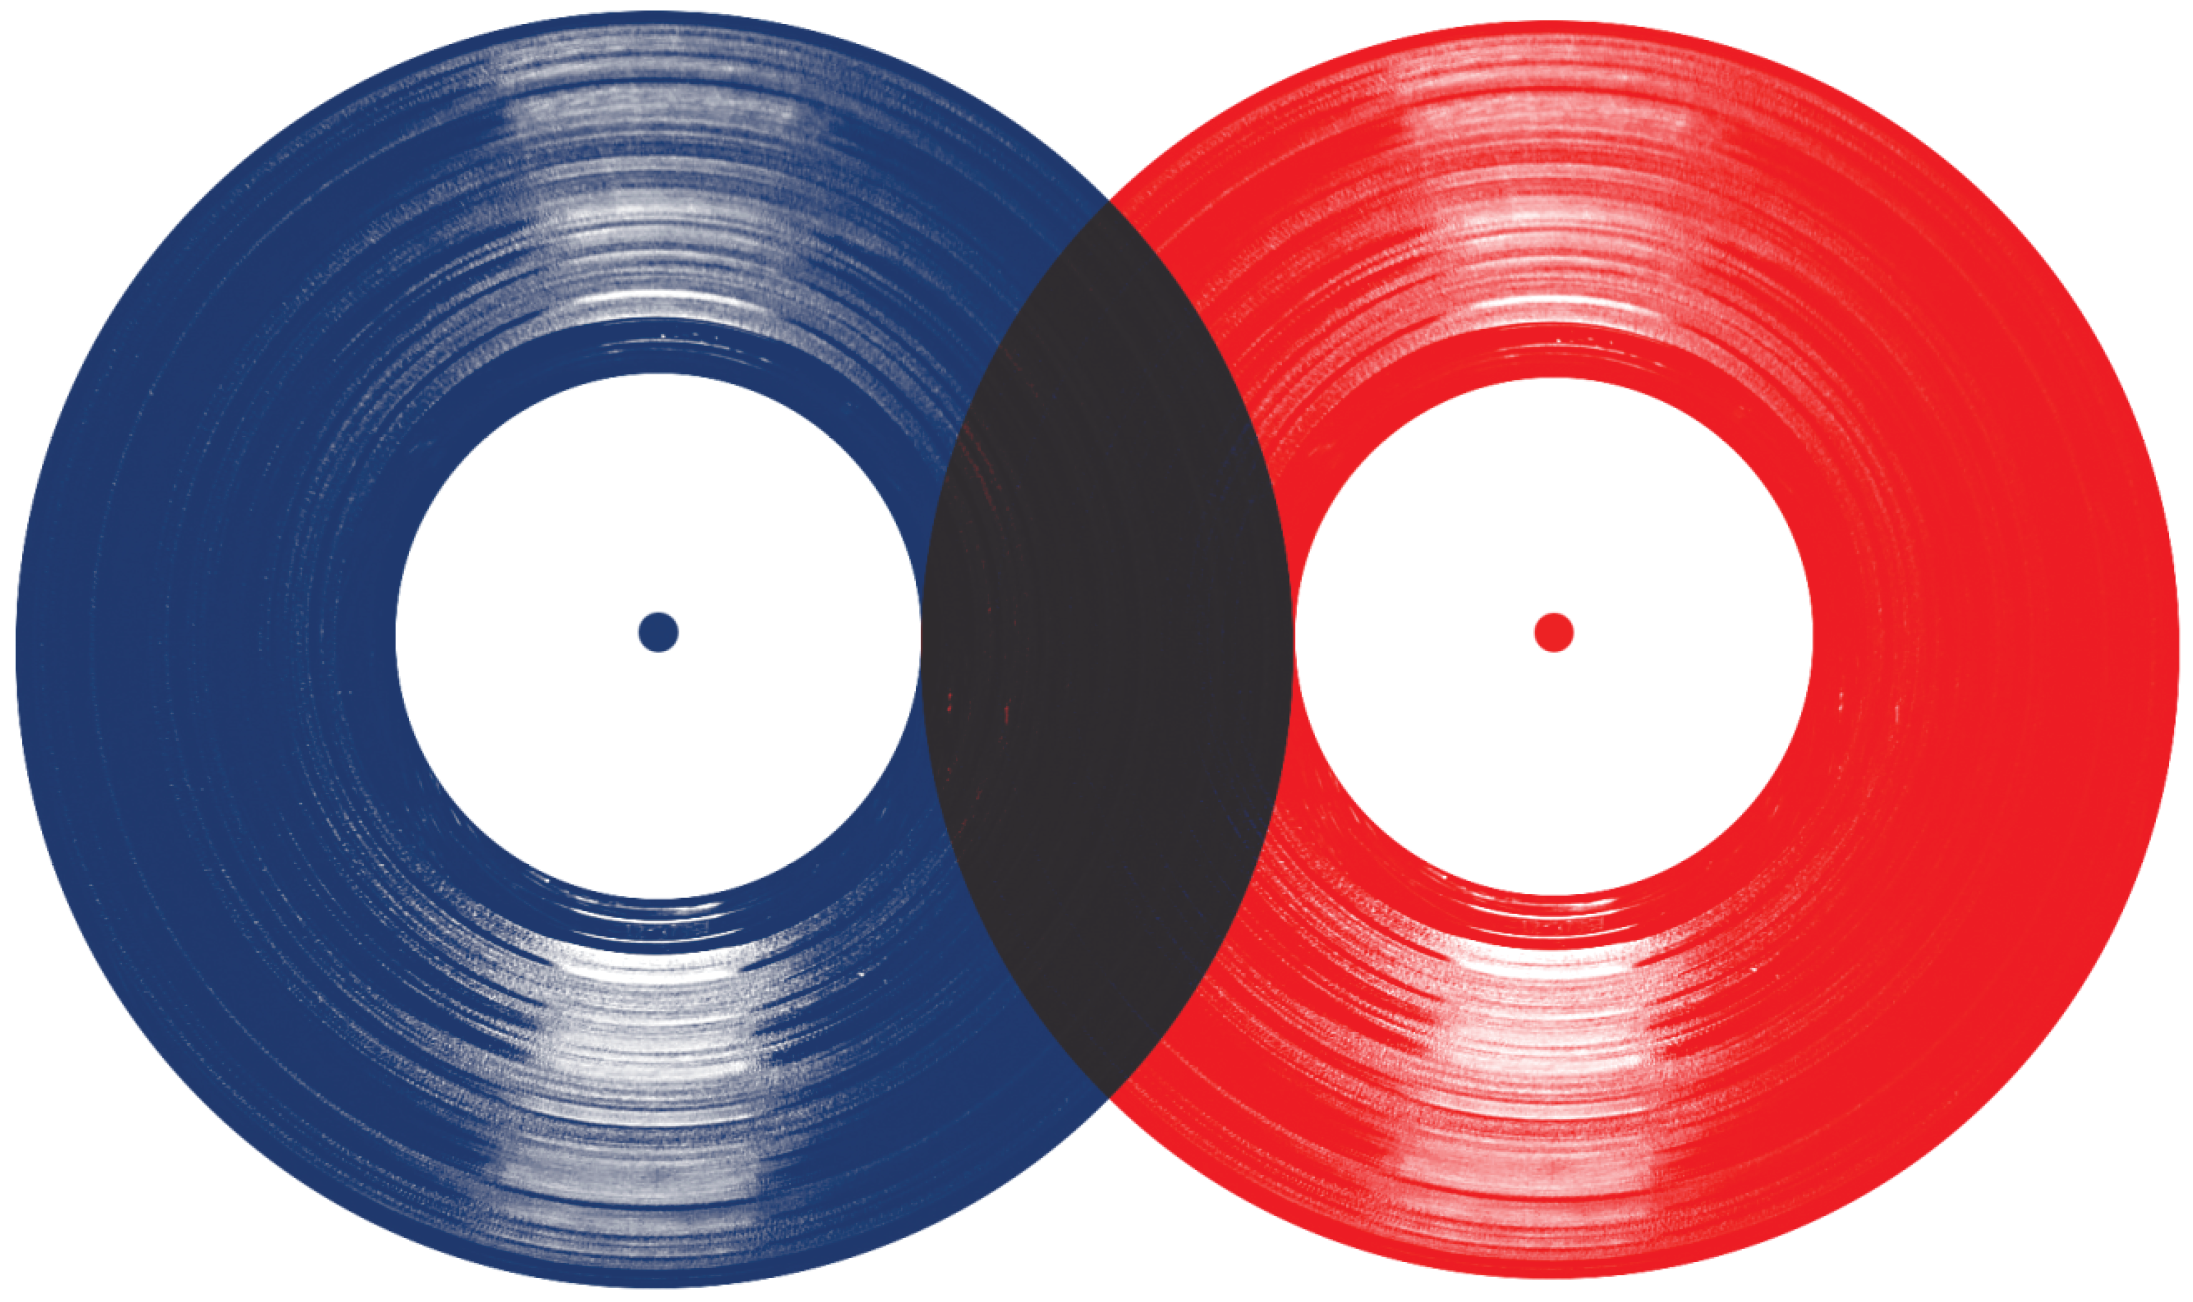 Vinyl Colors  United Record Pressing – United Record Pressing